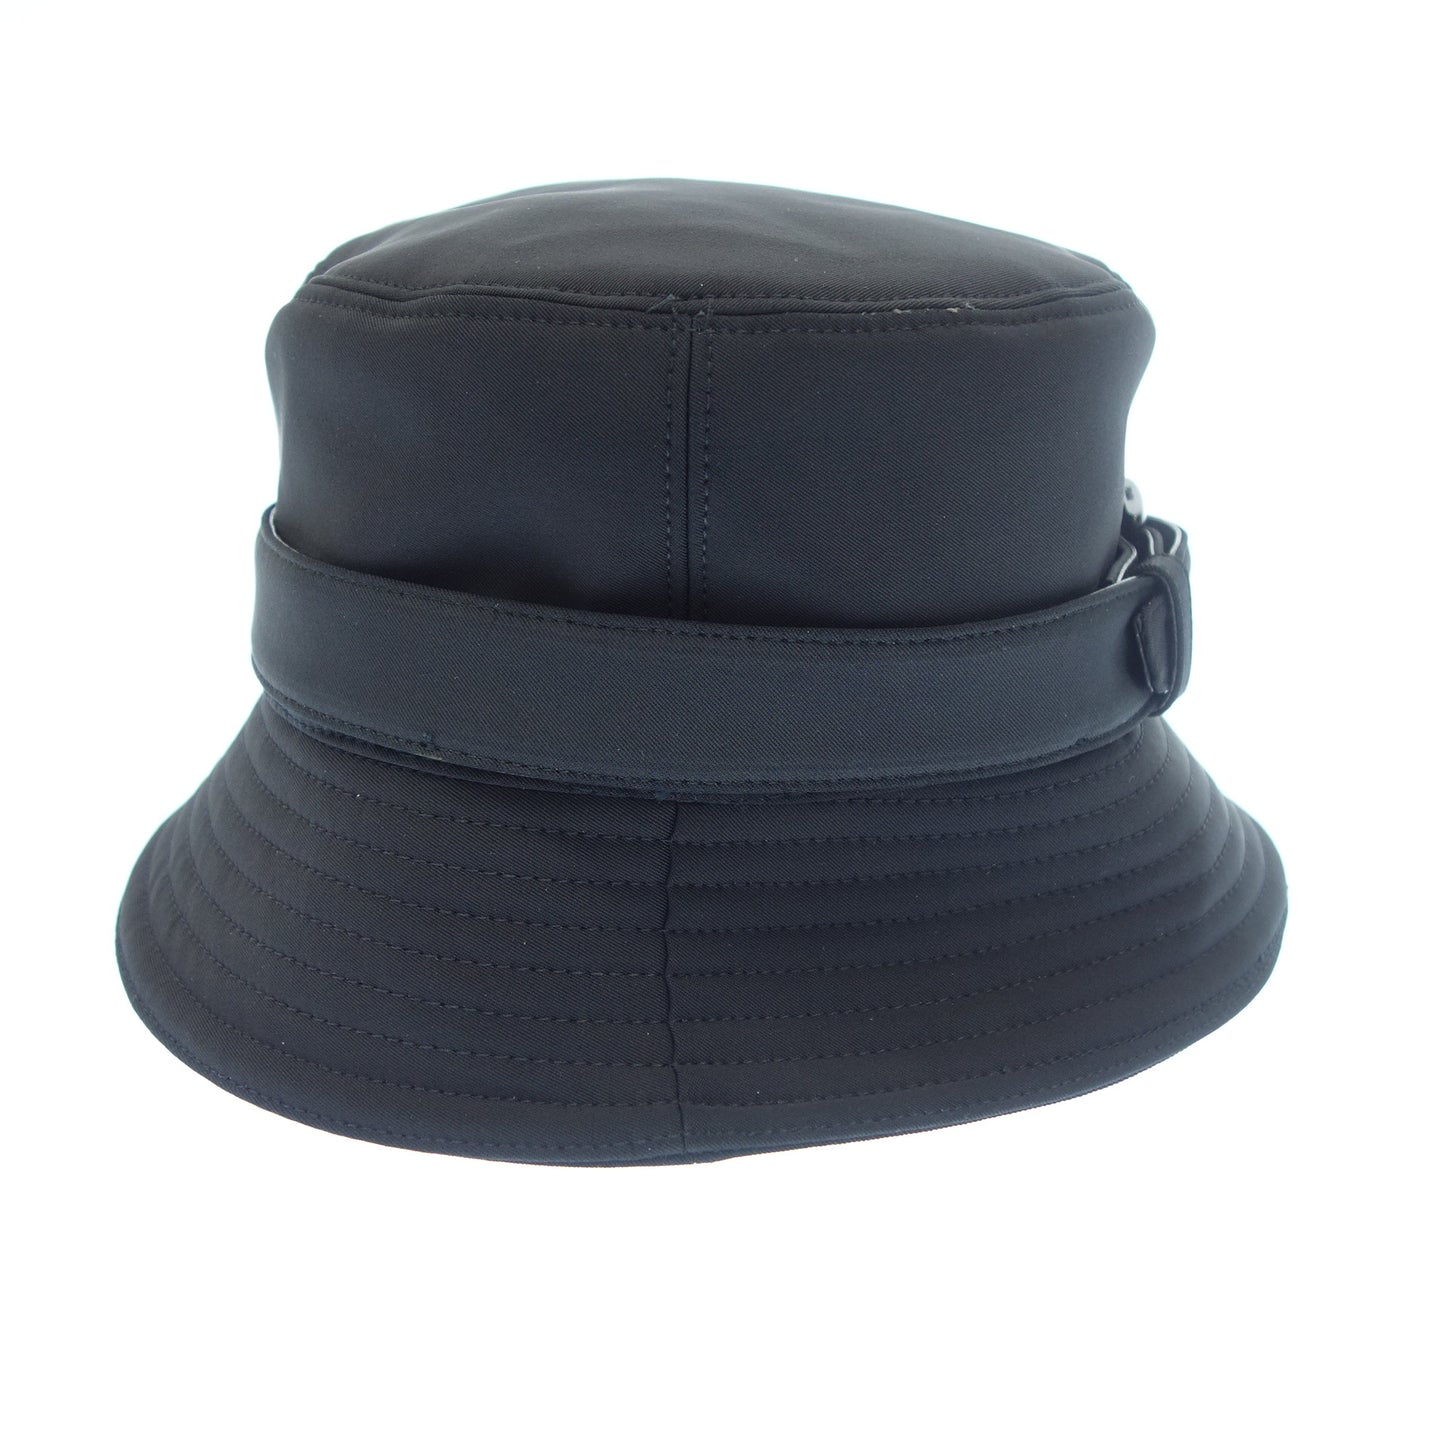 Good condition◆Prada Bucket Hat Belt Design Black PRADA [AFI1] 